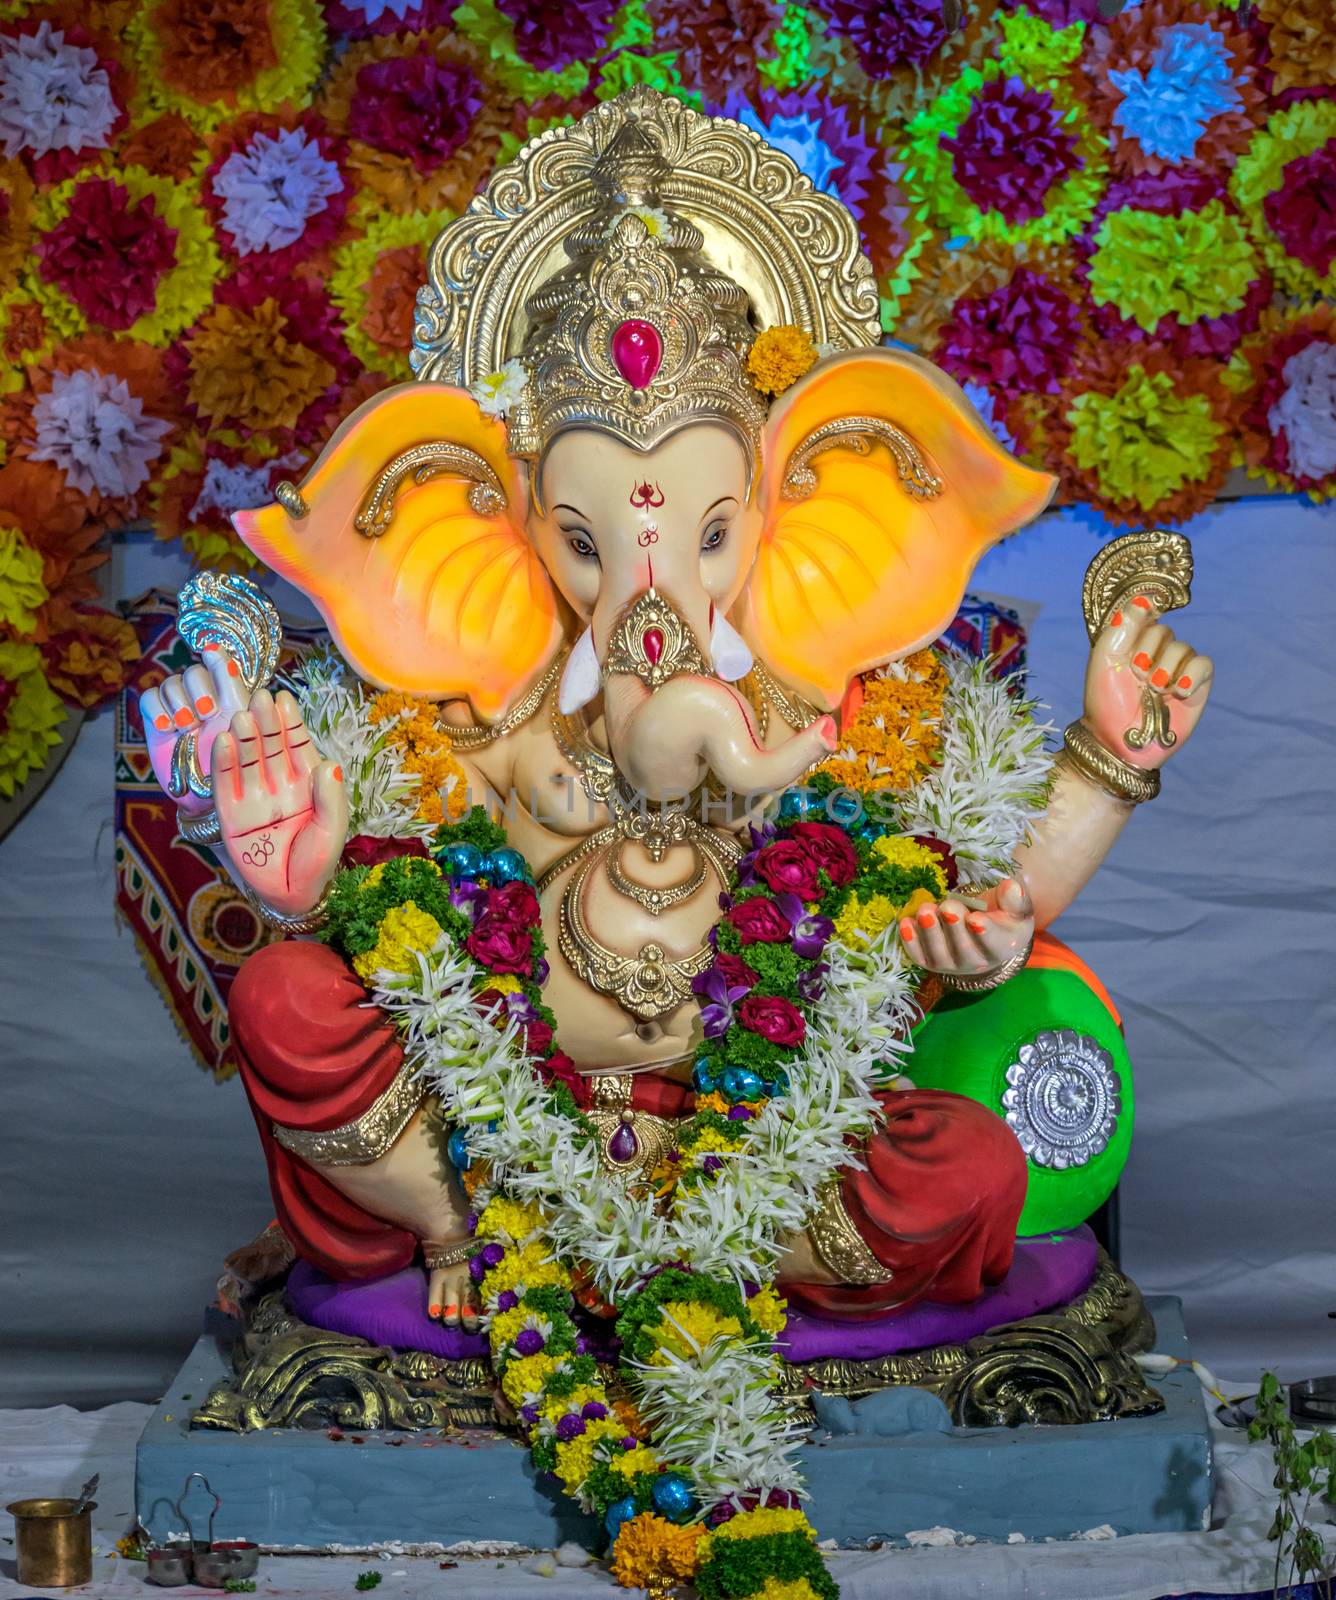 Portrait , closeup view of decorated and garlanded  idol of Hindu God Ganesha in Pune ,Maharashtra, India. by lalam